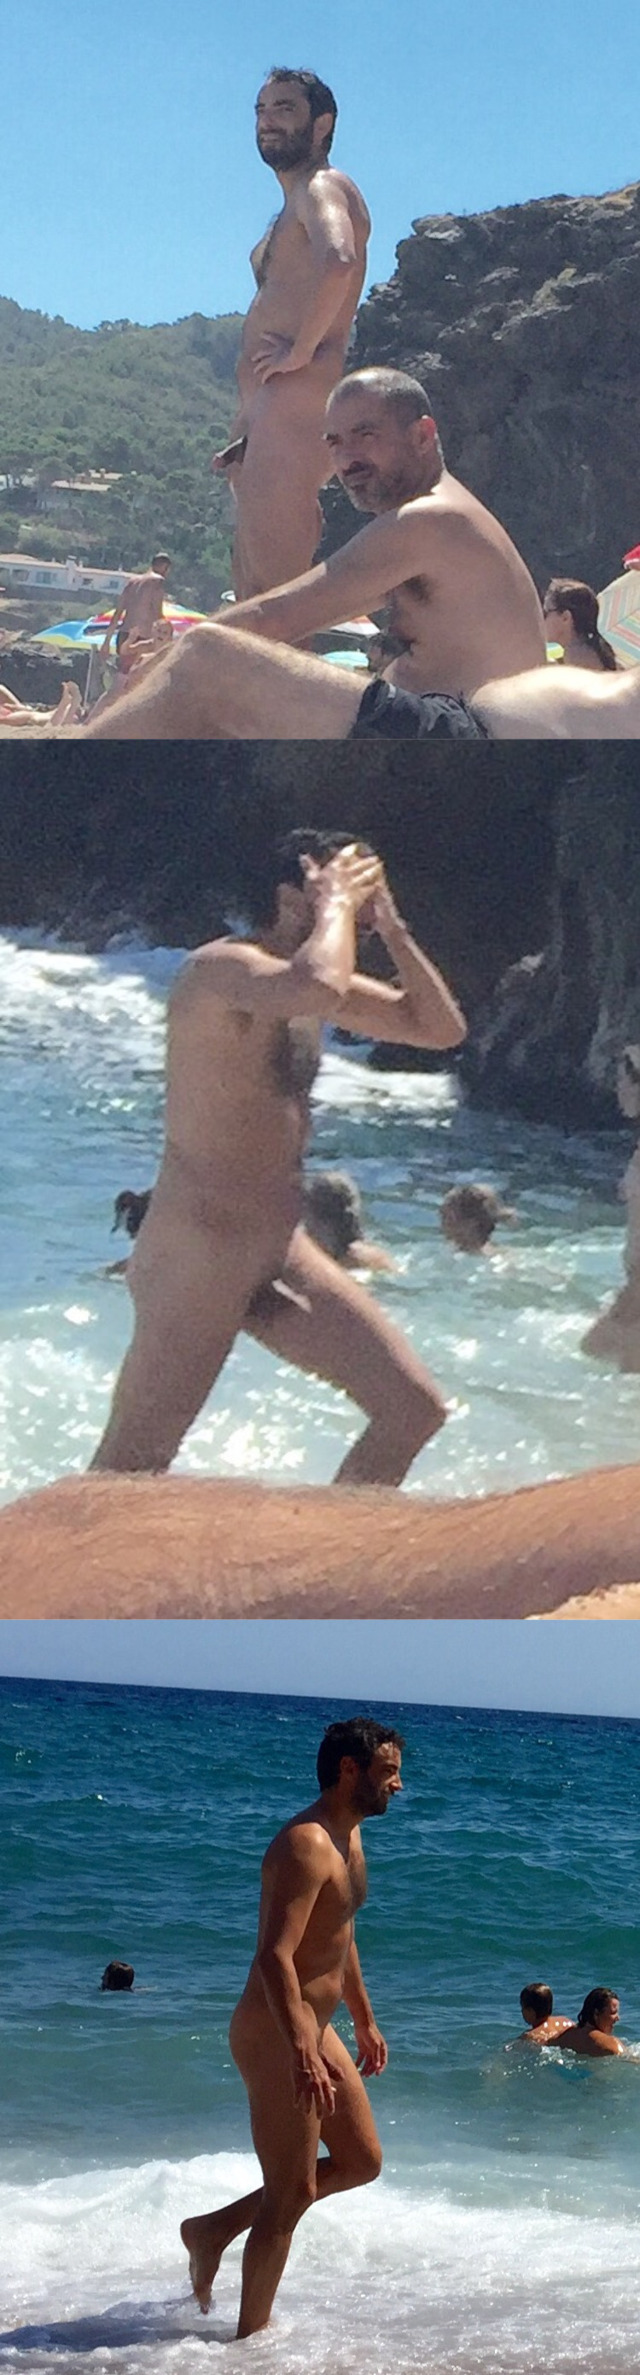 nudist man caught beach spy cam